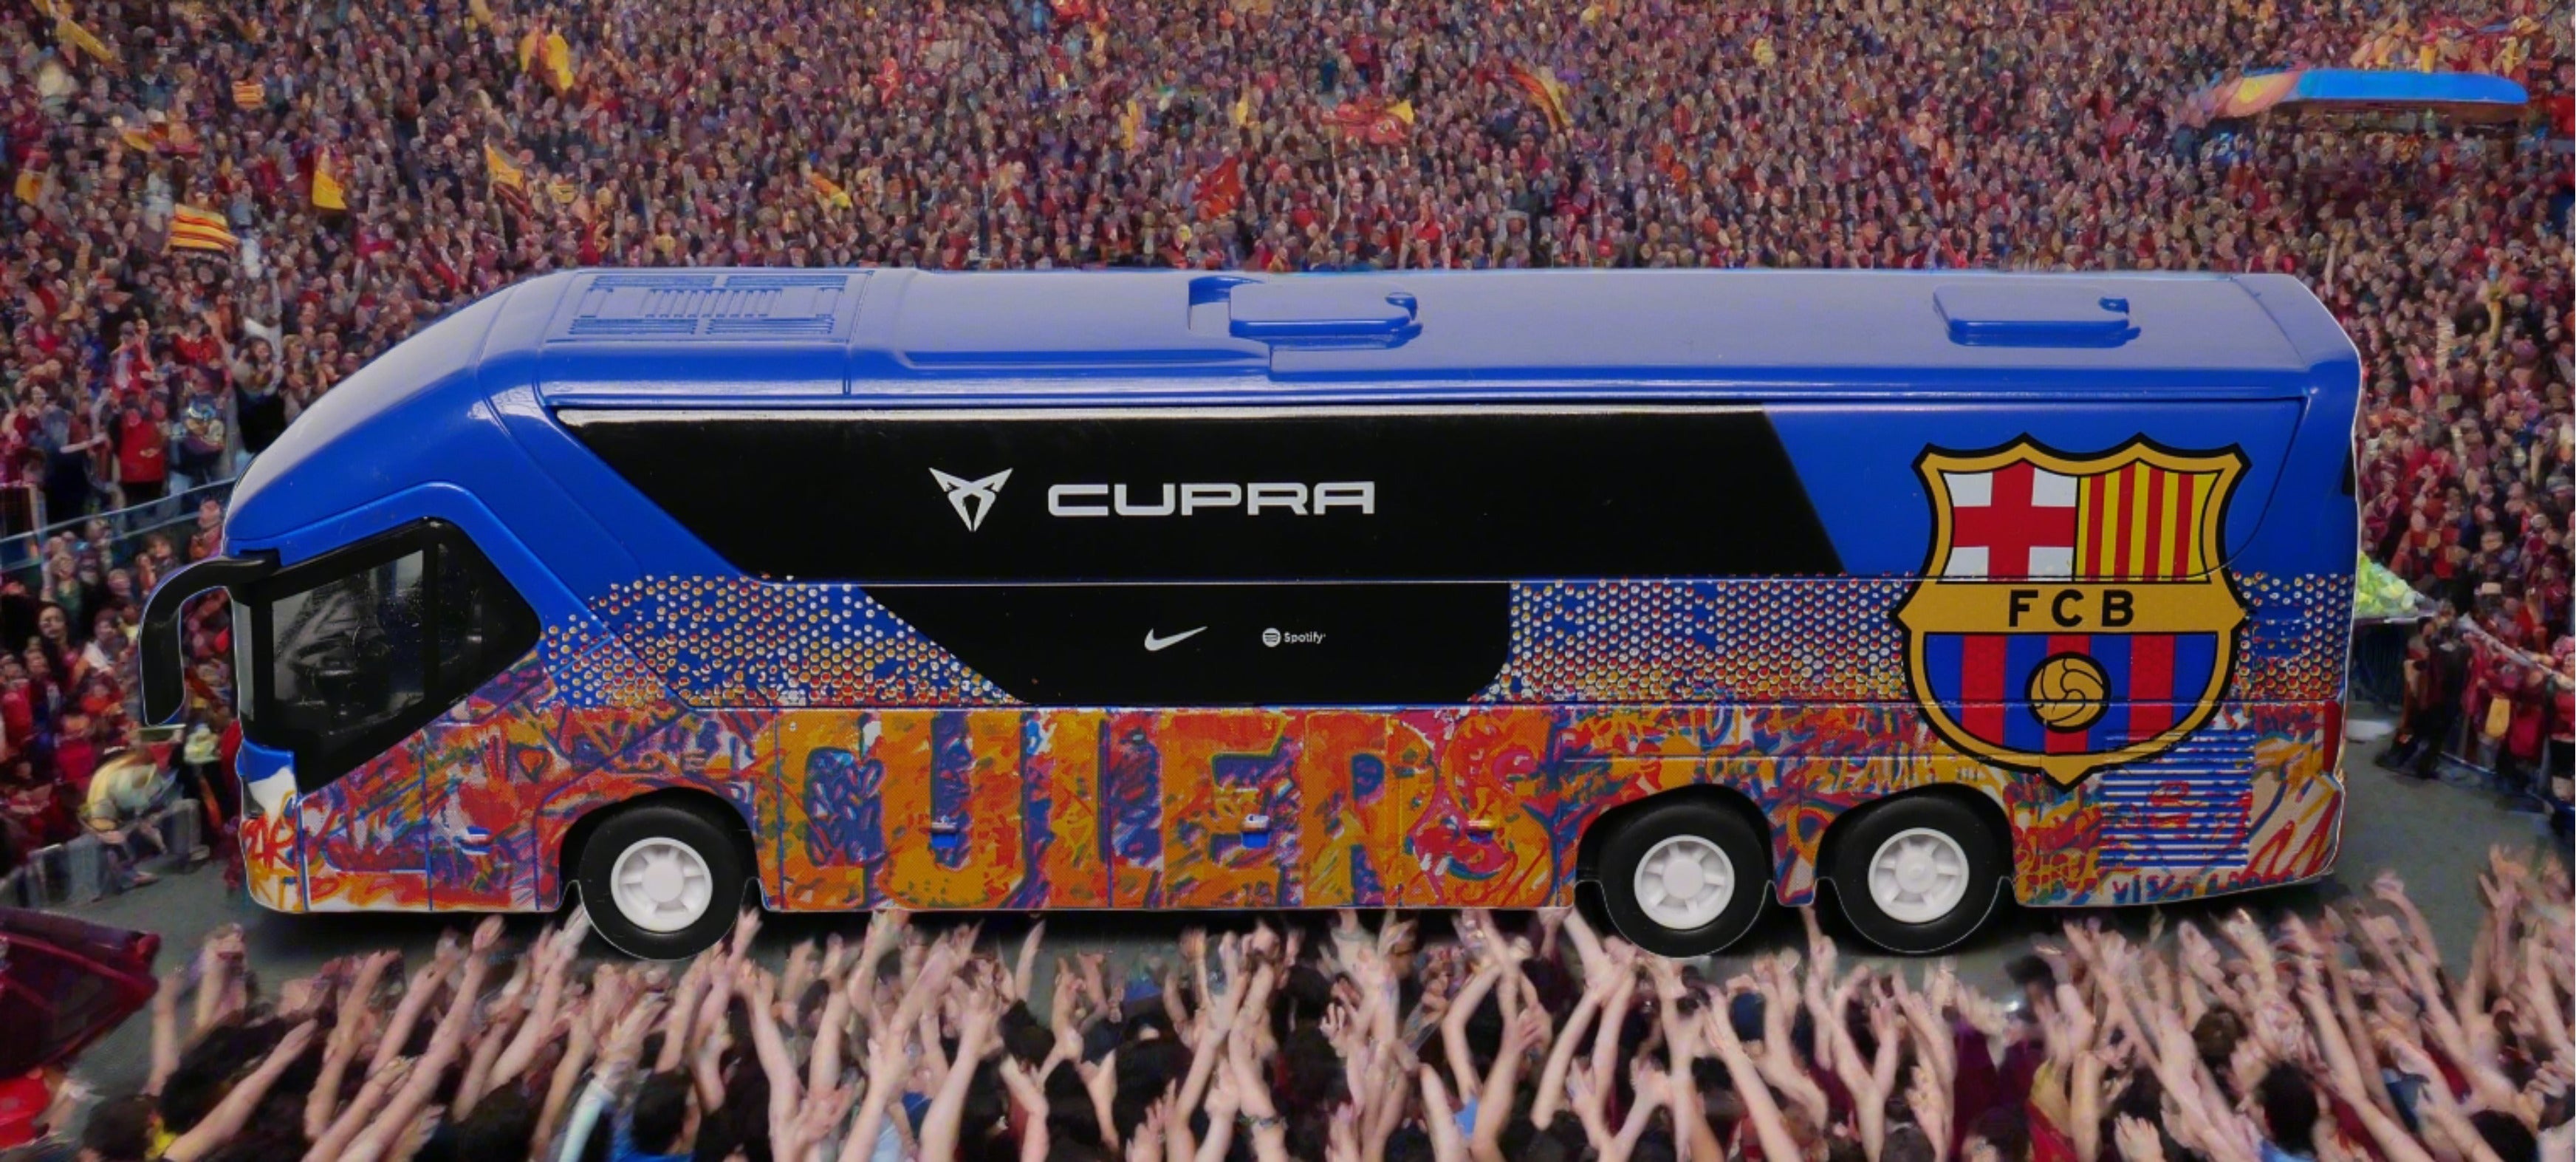 FC Barcelona team bus